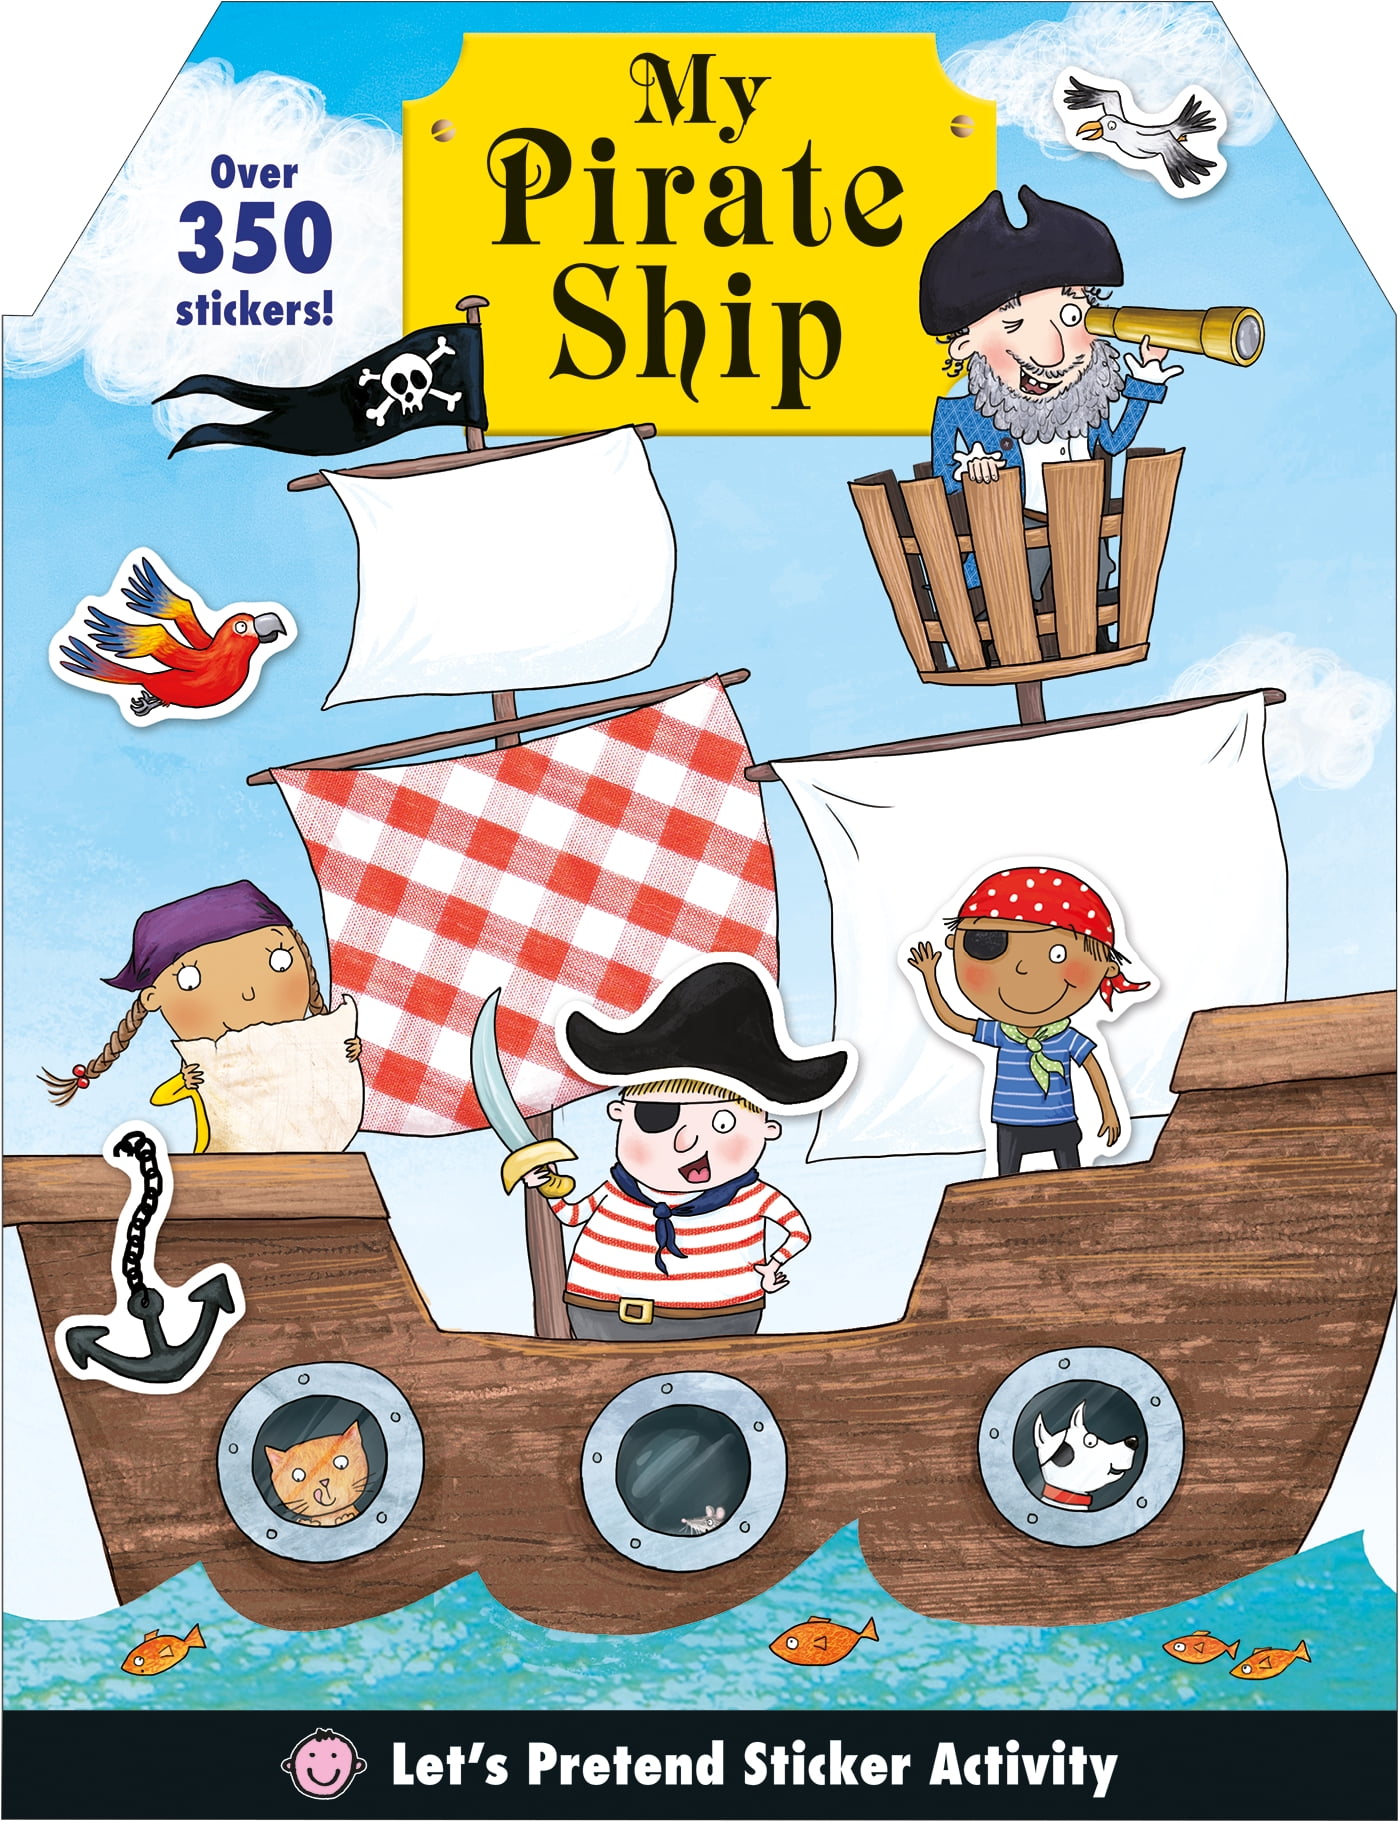 Let's Pretend: My Pirate Ship Sticker Activity Book - Walmart.com